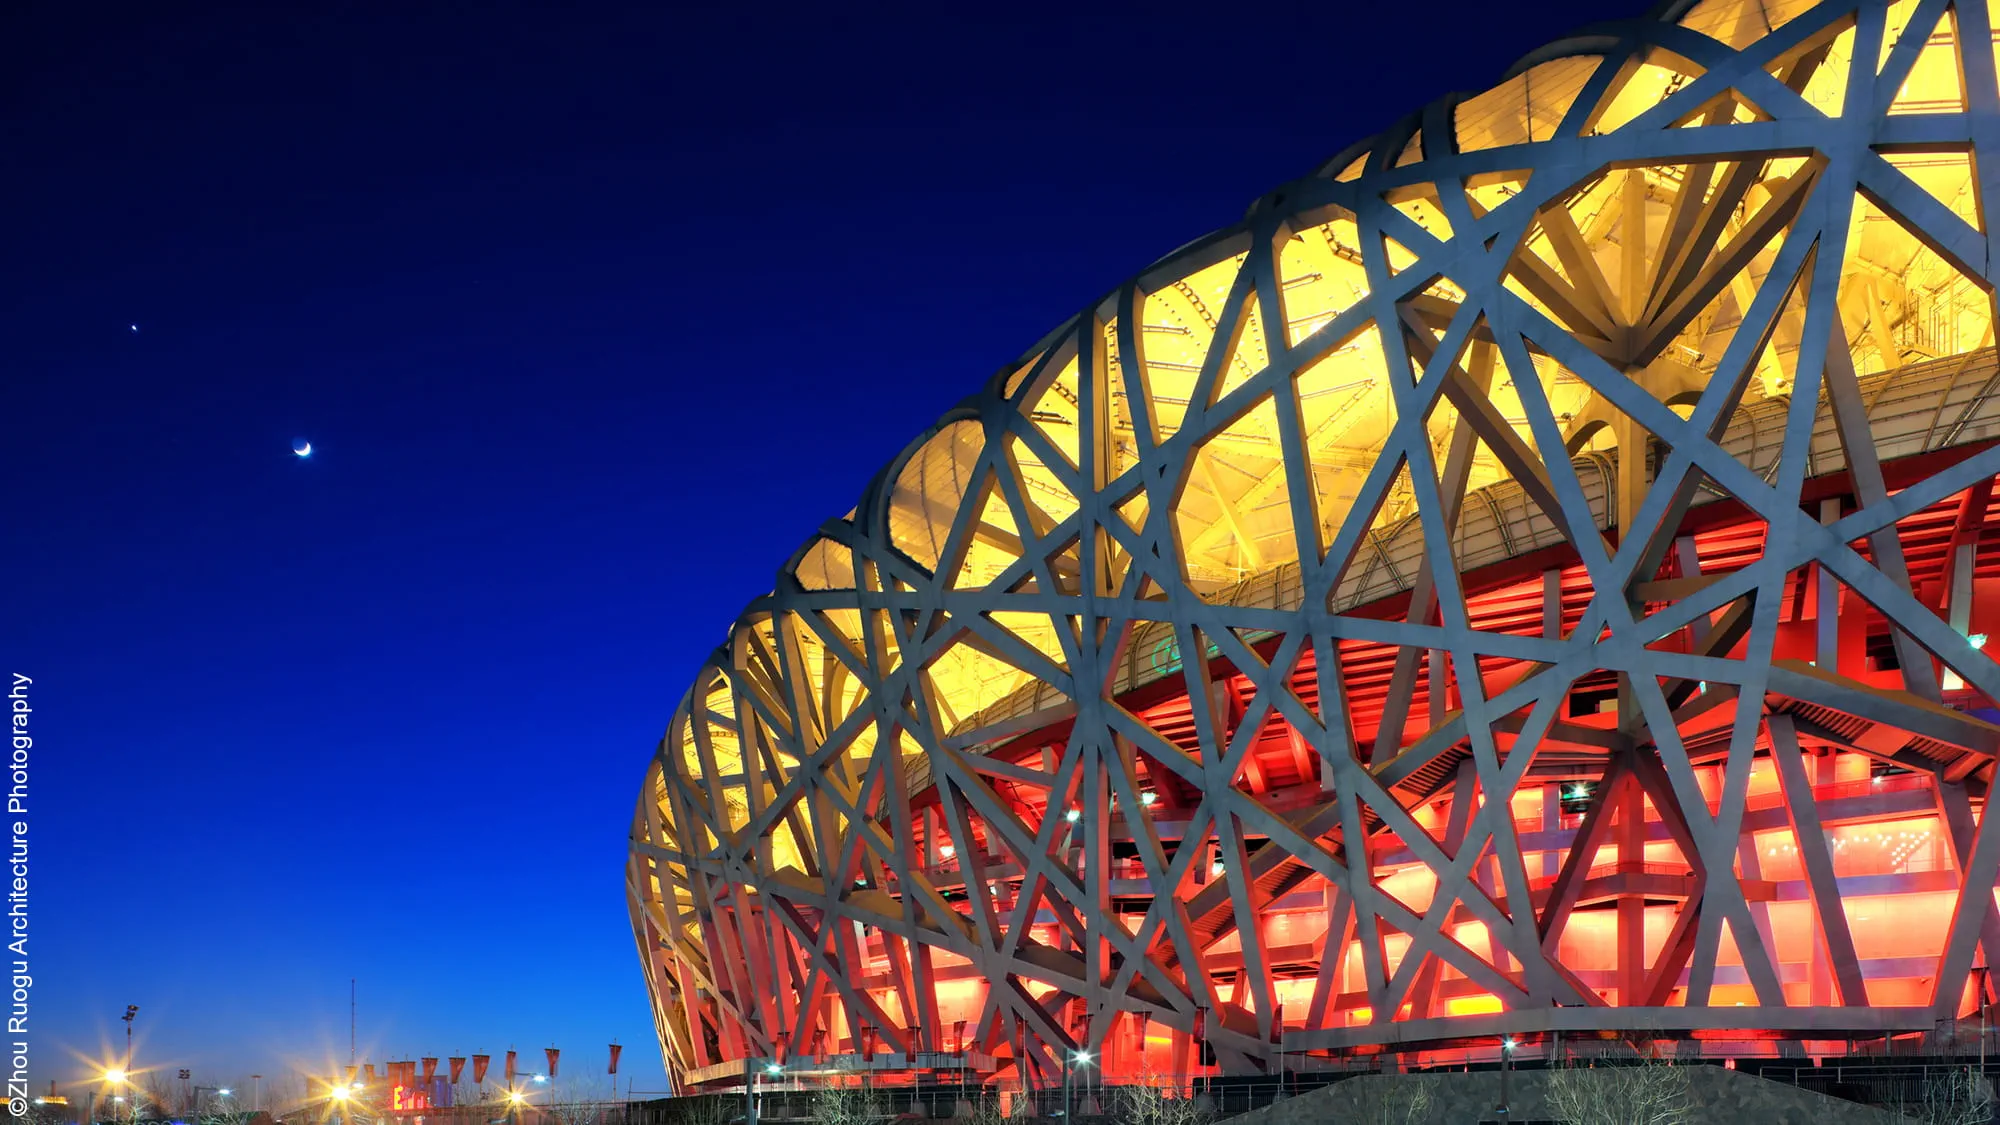 National Stadium, Beijing (Bird's Nest) - exterior view showing the structure